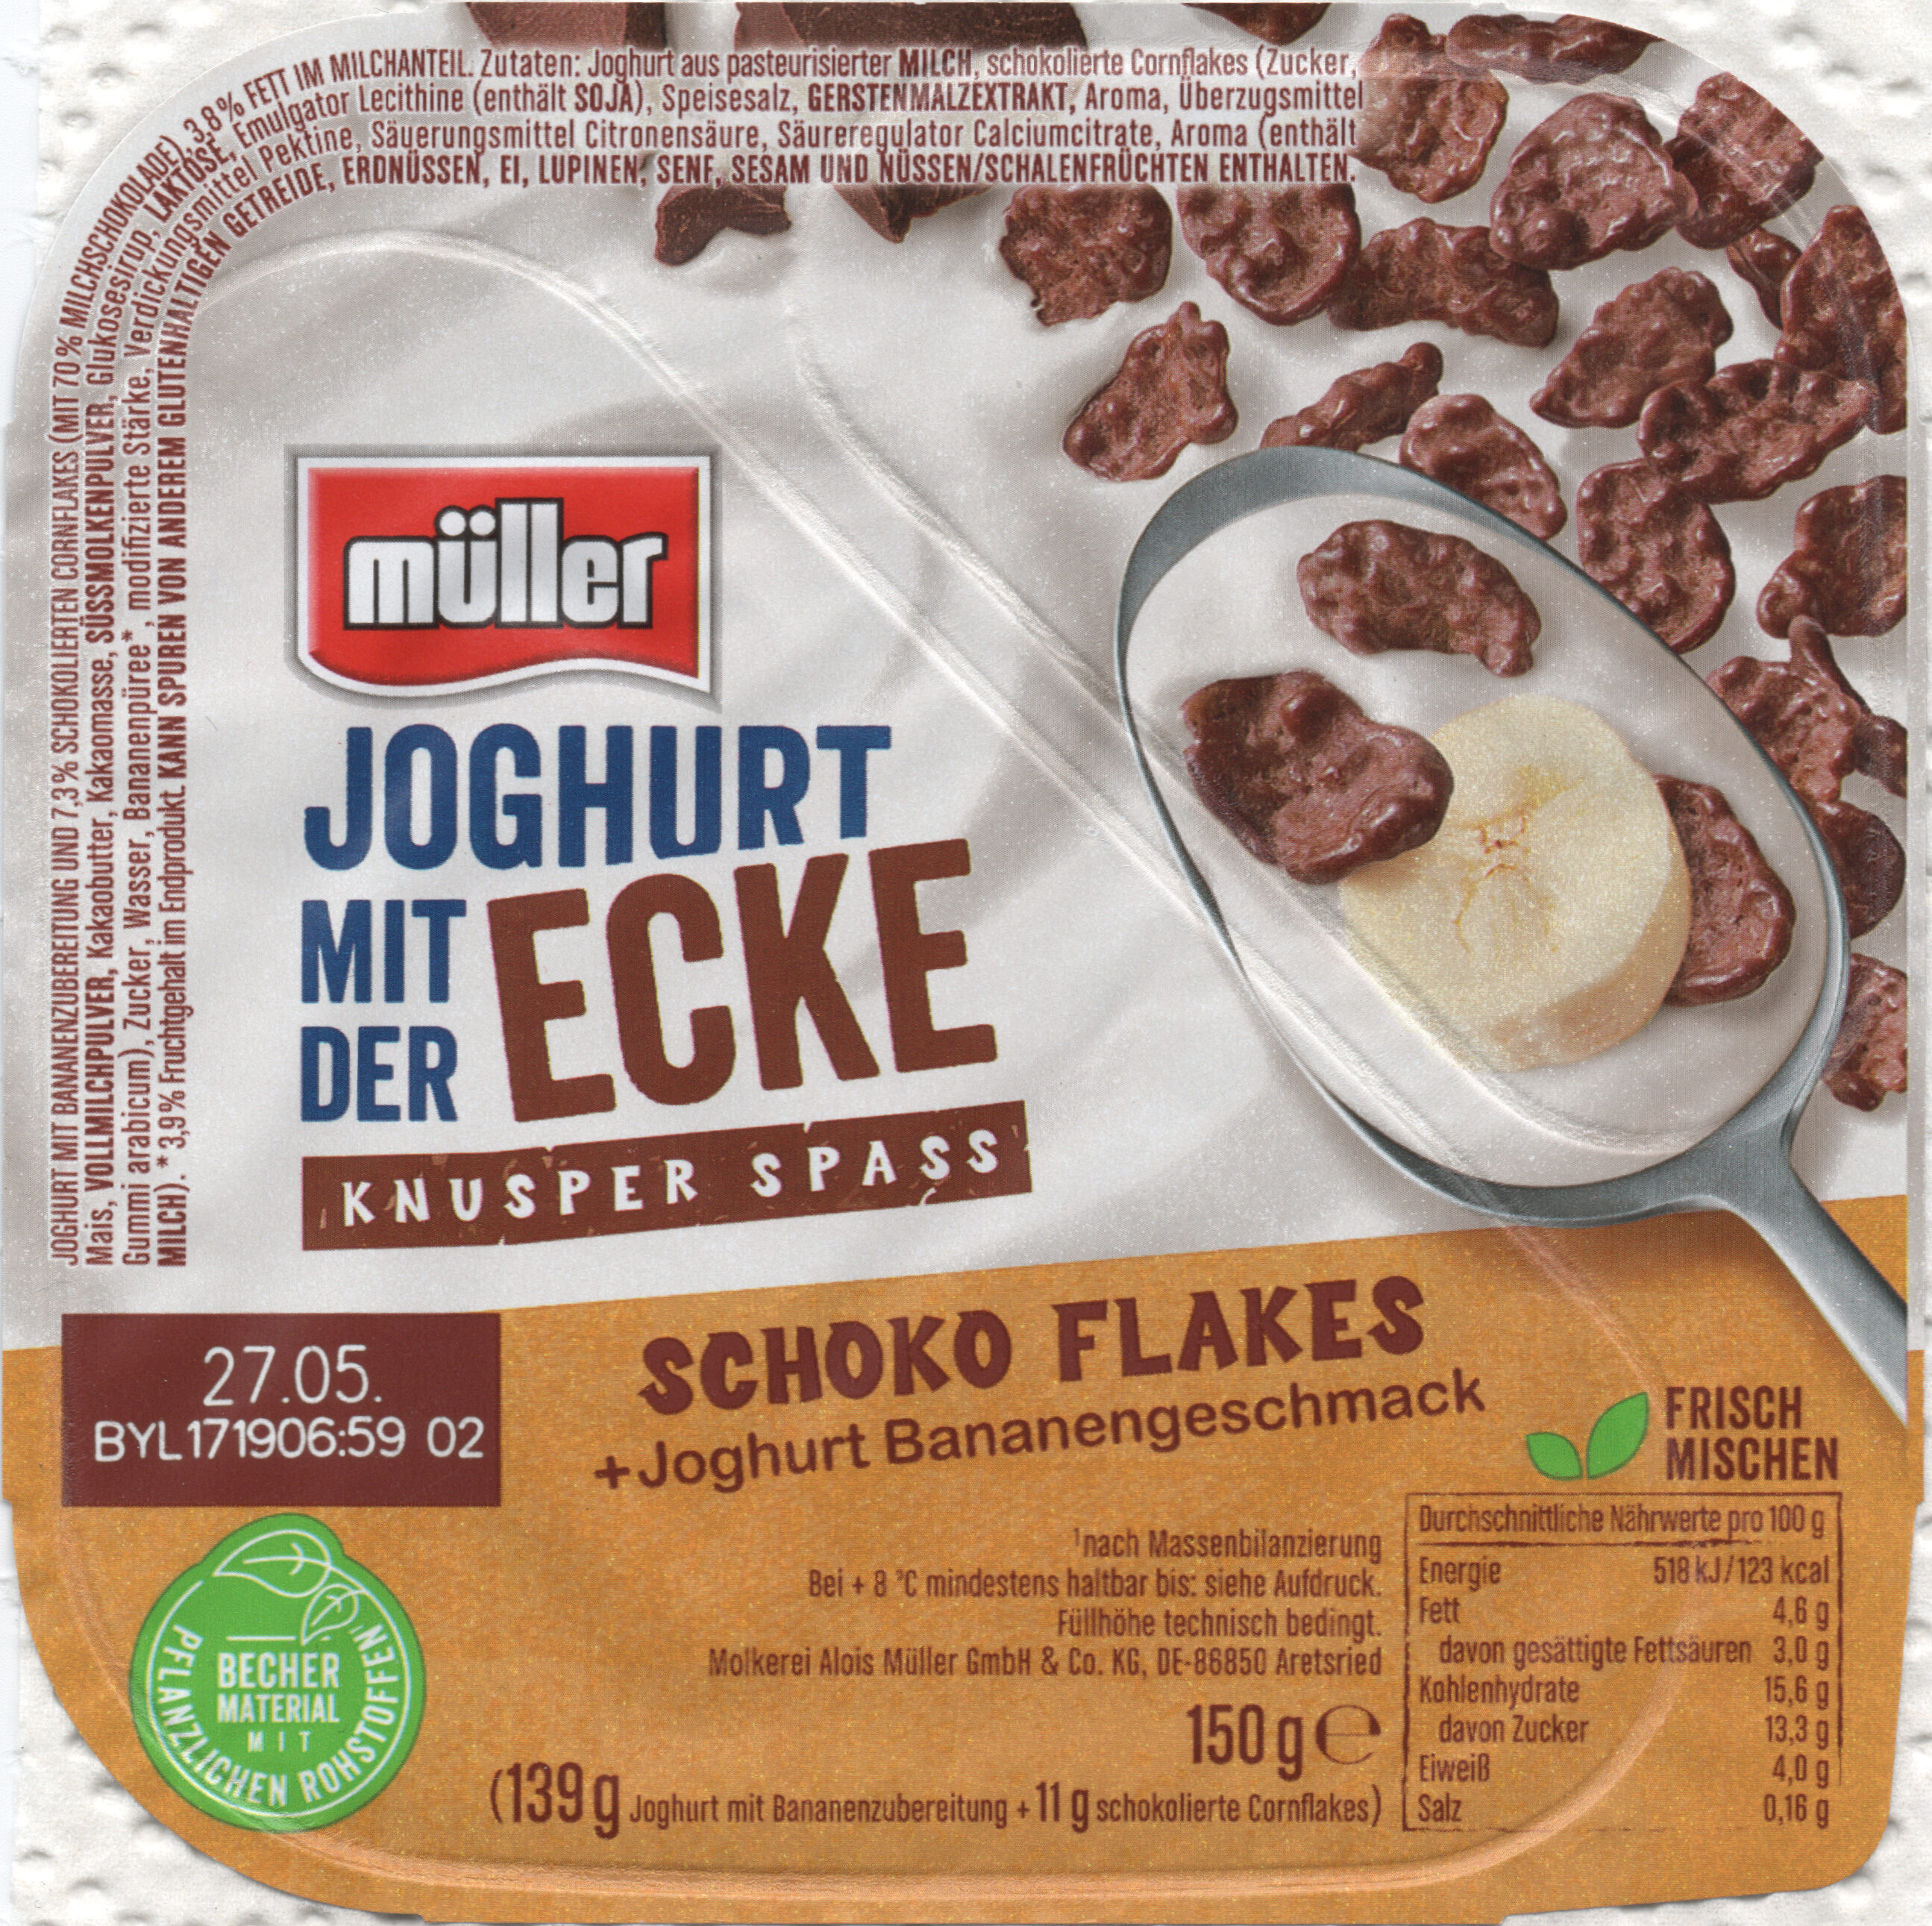 Joghurt mit der Ecke - Schoko Flakes - Producto - de